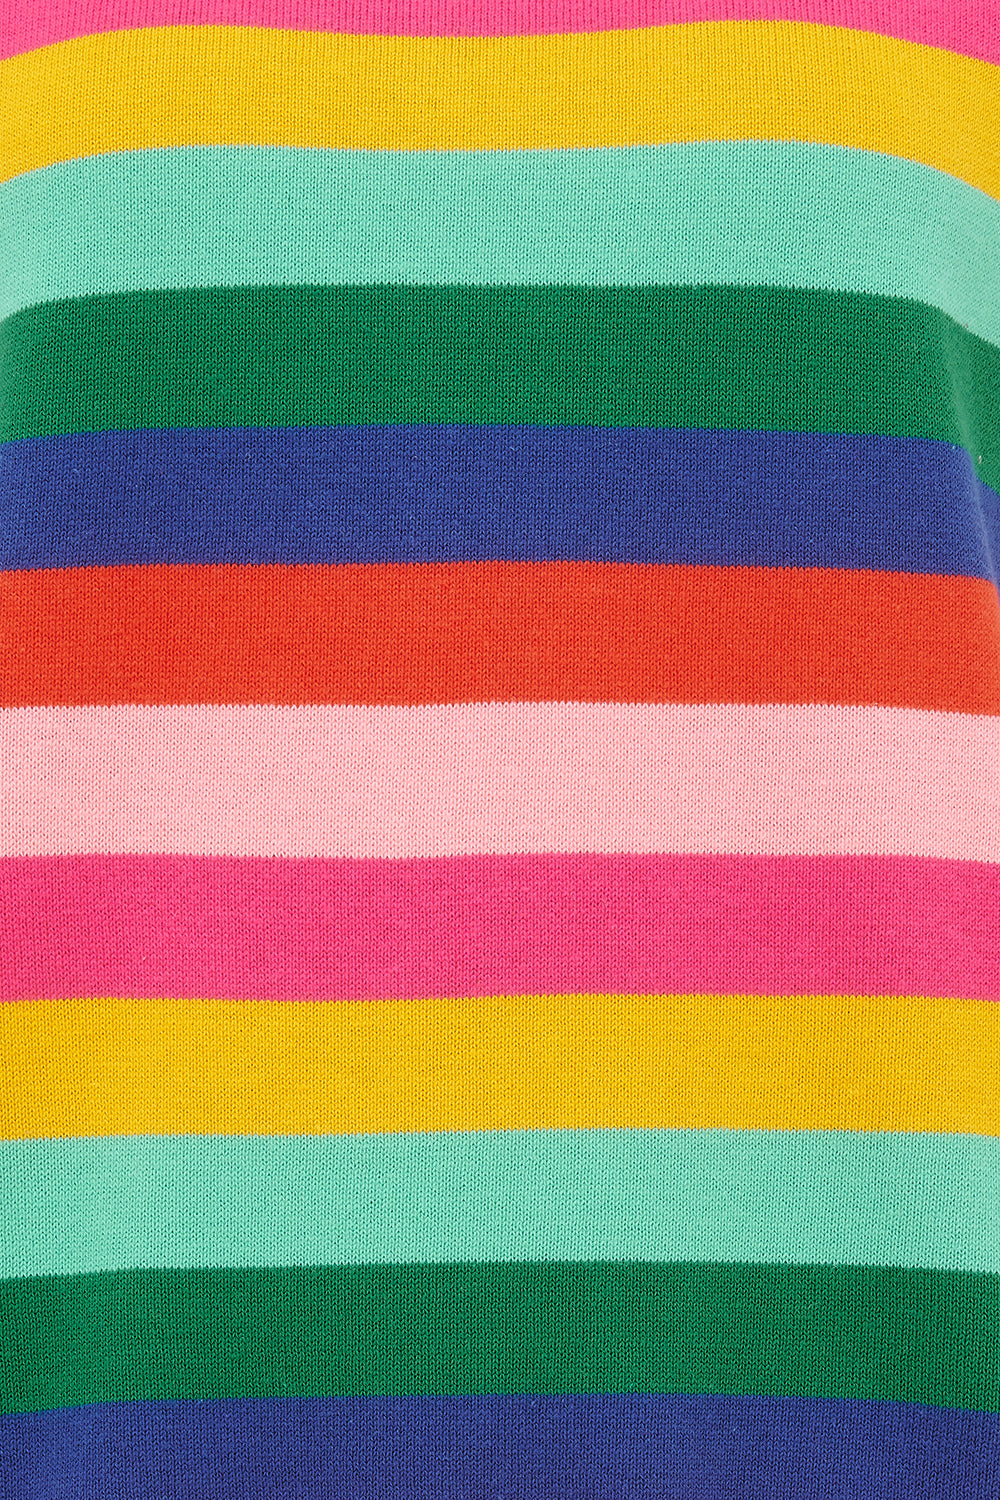 Sugarhill - Leslie Knitted Tank - Rainbow Stripes